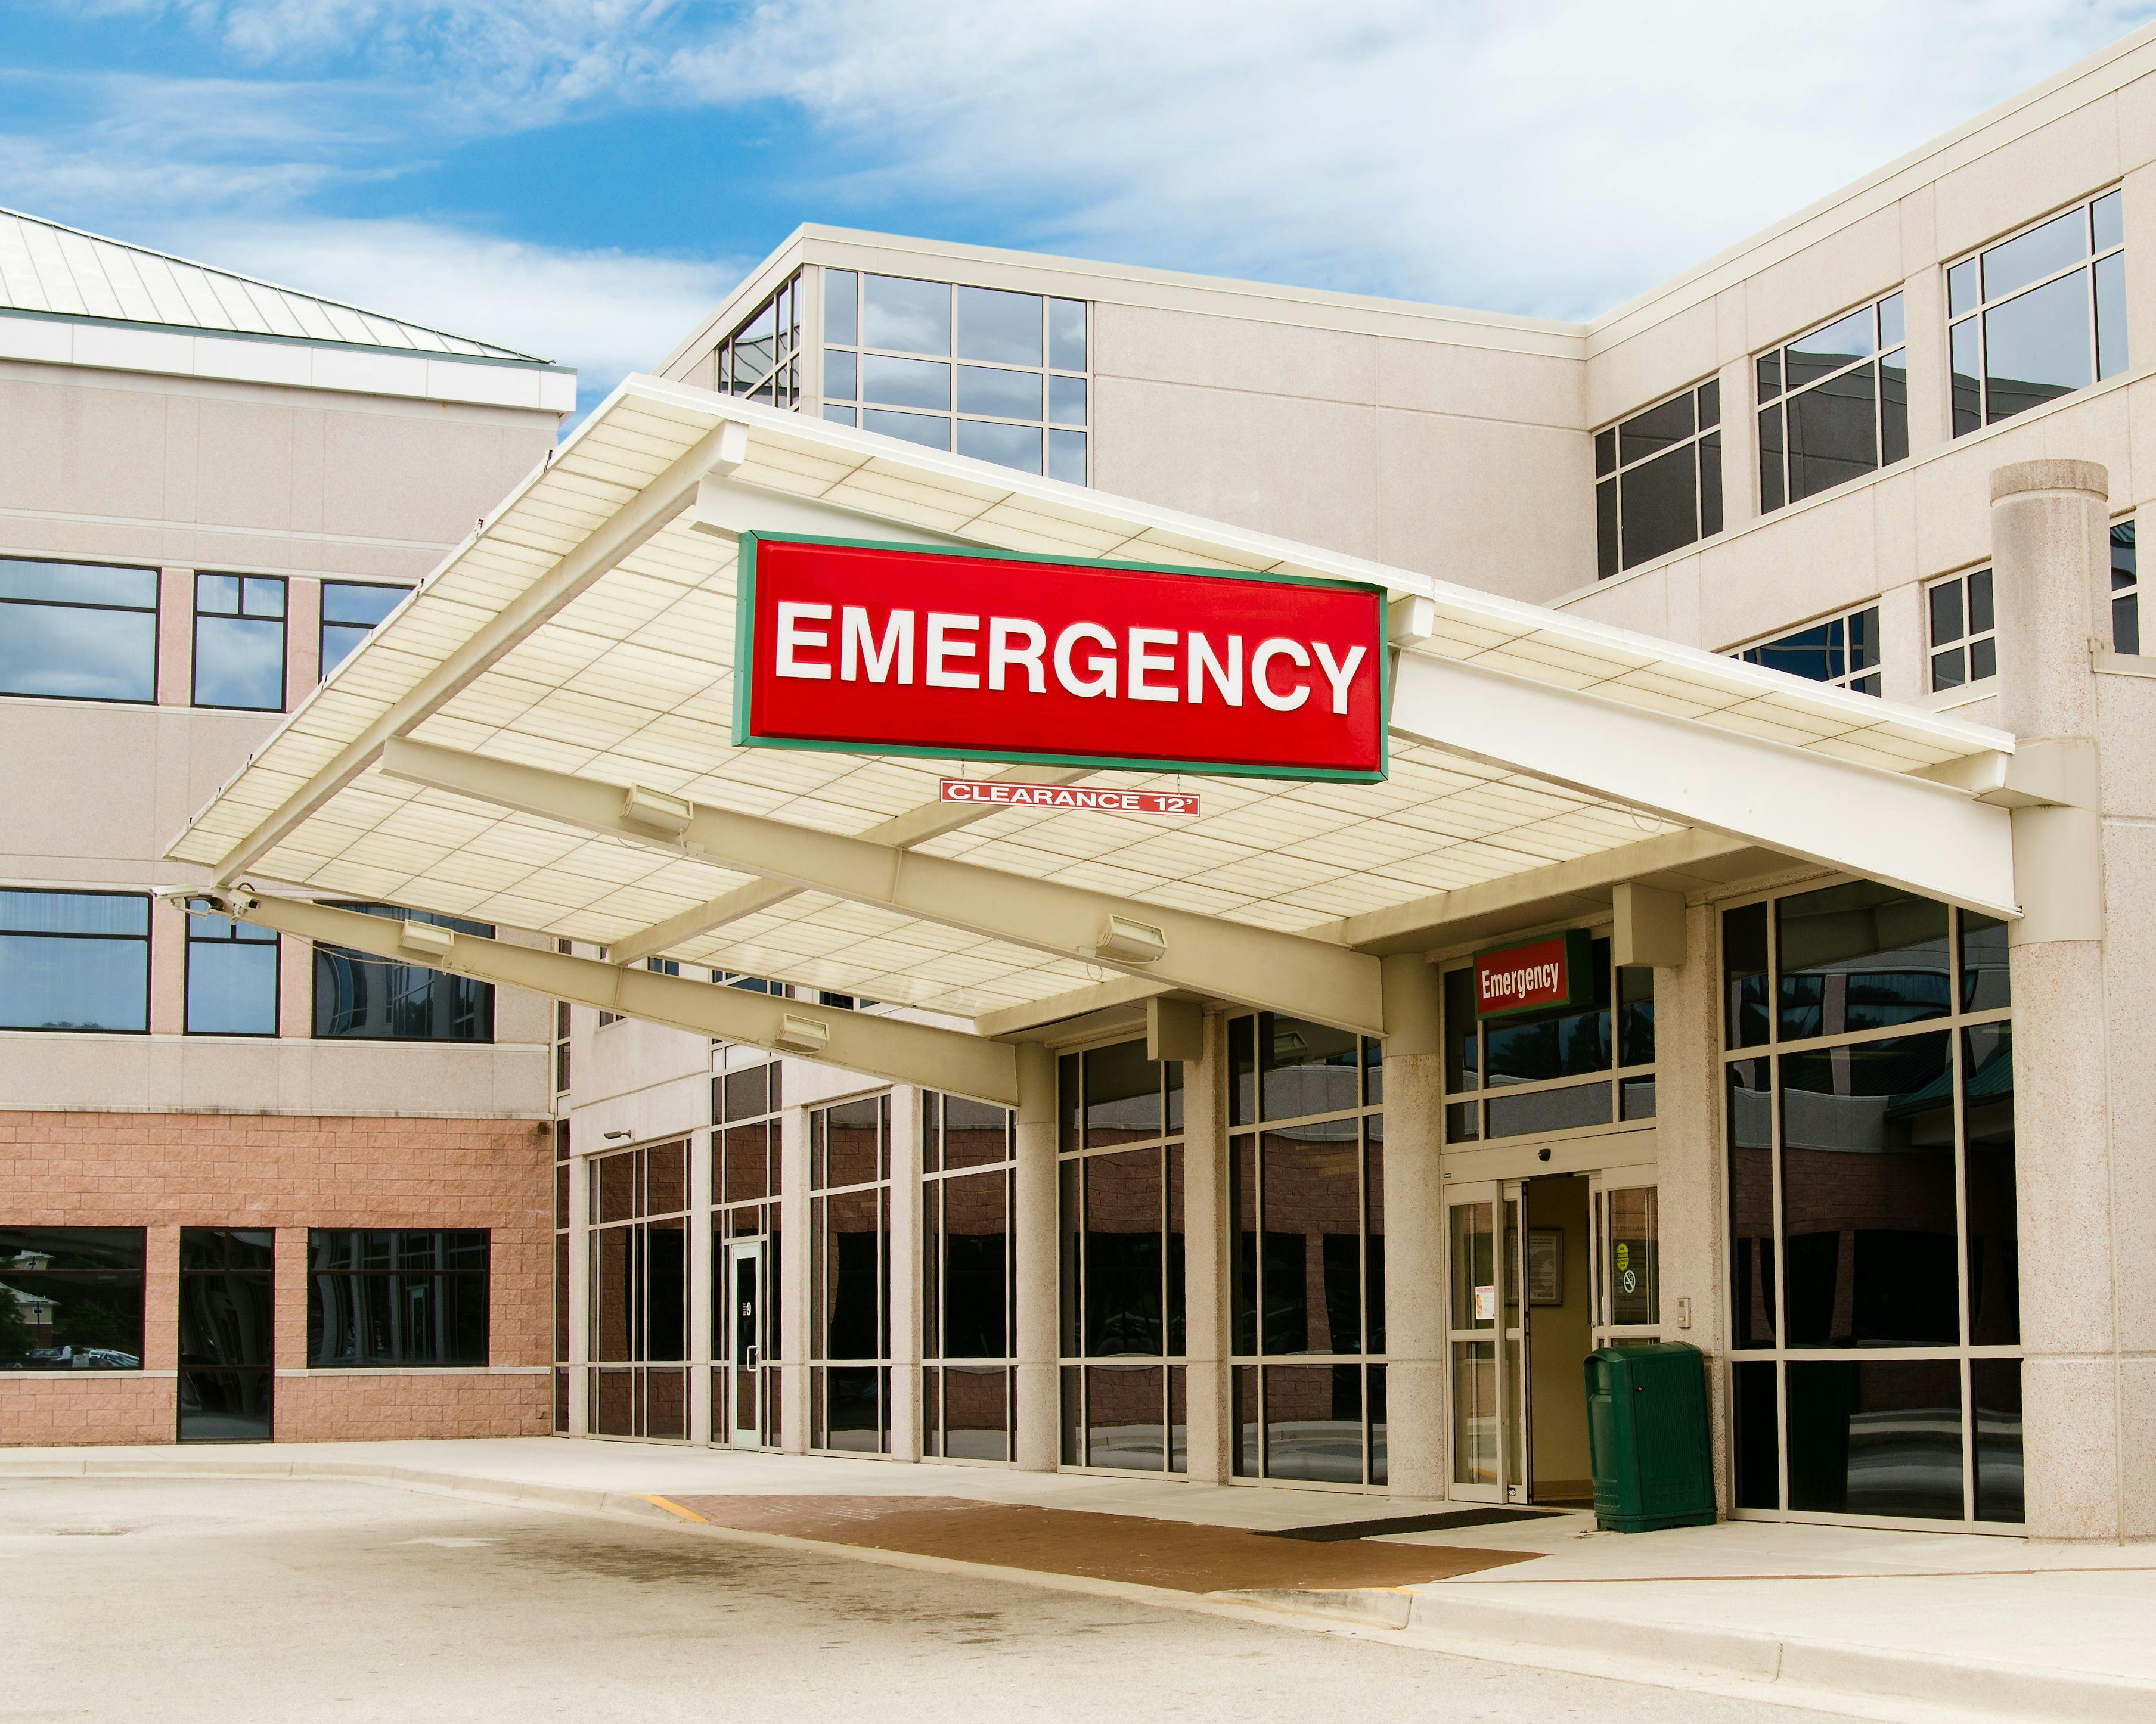 Entrance to emergency room at hospital | Image credit: Robert Hainer – stock.adobe.com